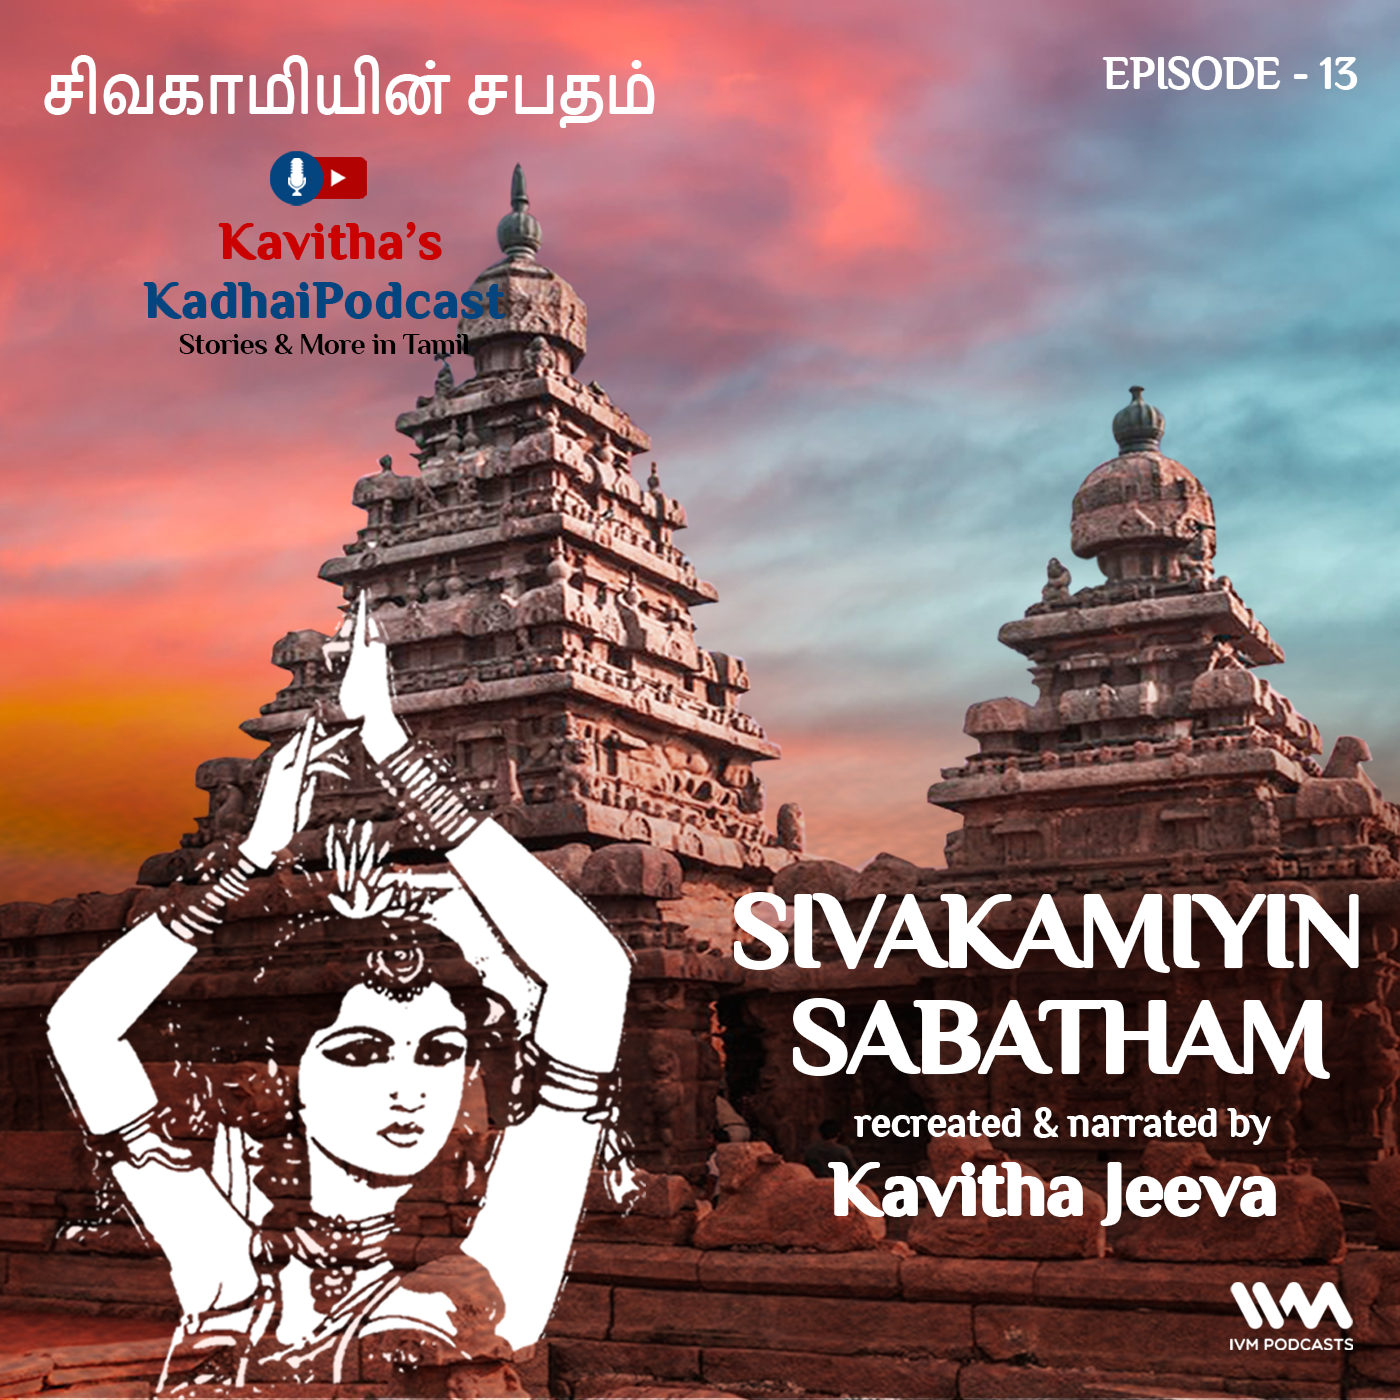 KadhaiPodcast's Sivakamiyin Sabatham - Episode # 13